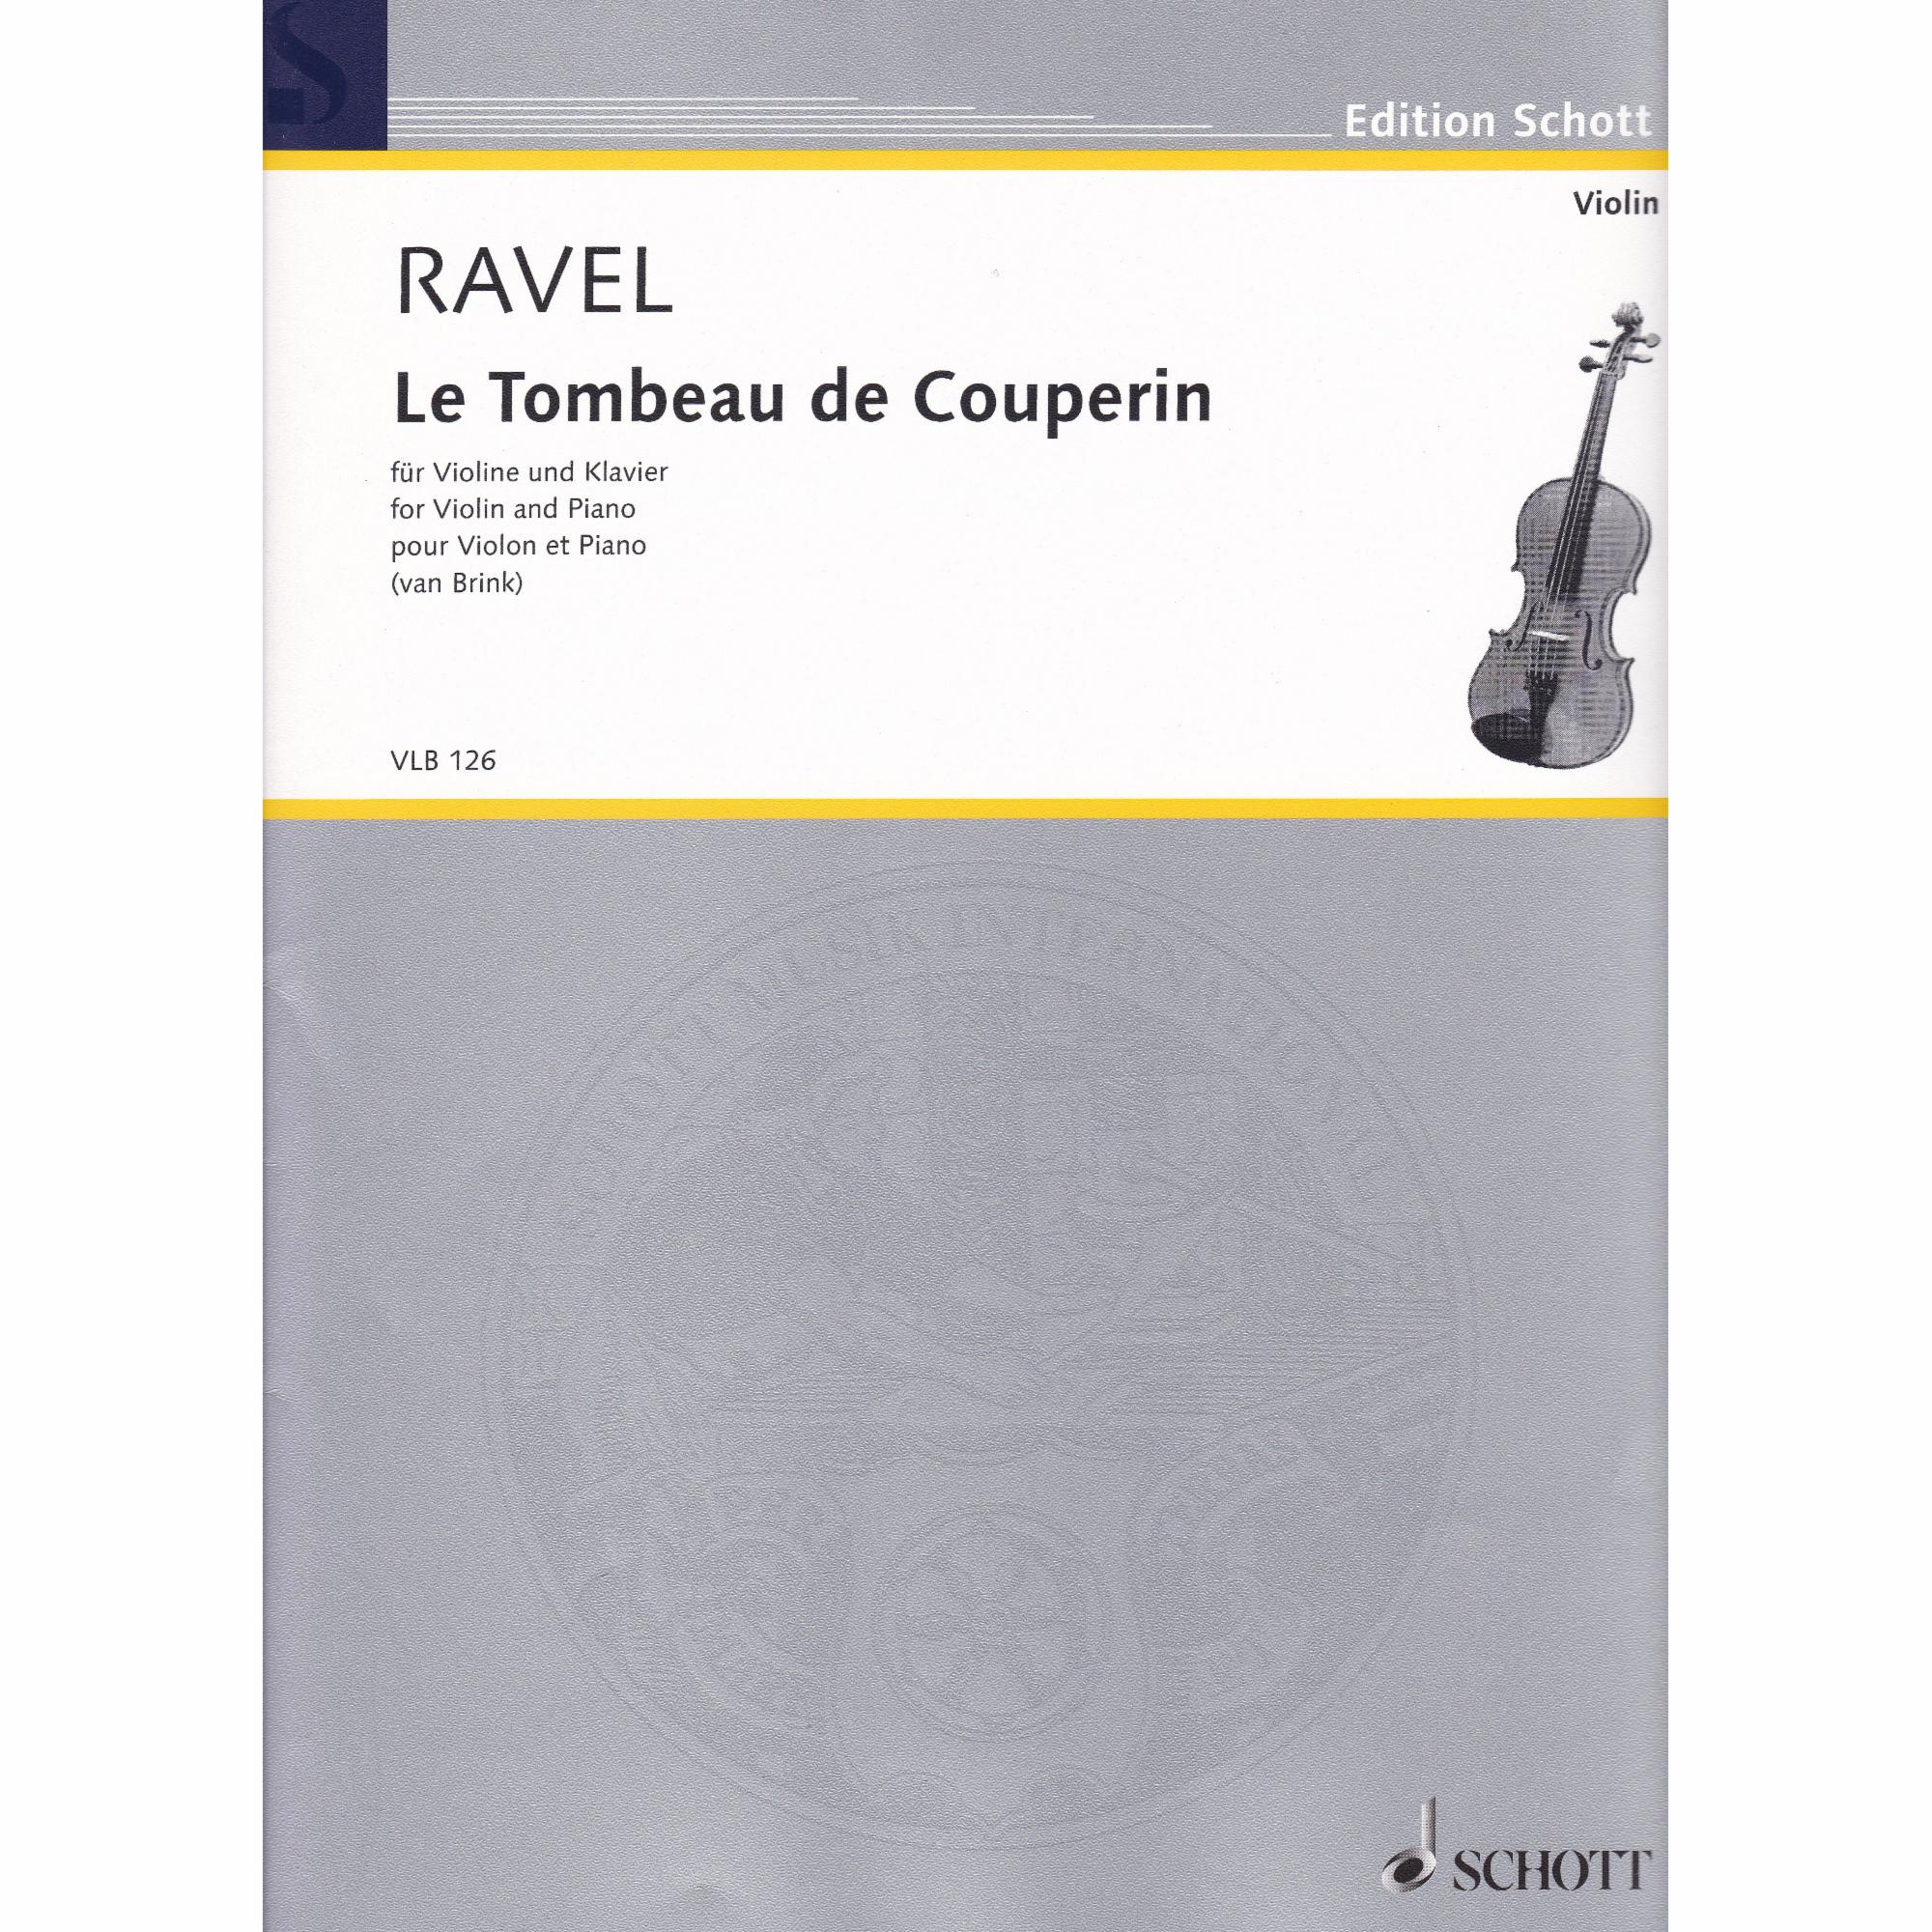 Le Tombeau de Couperin for Violin and Piano